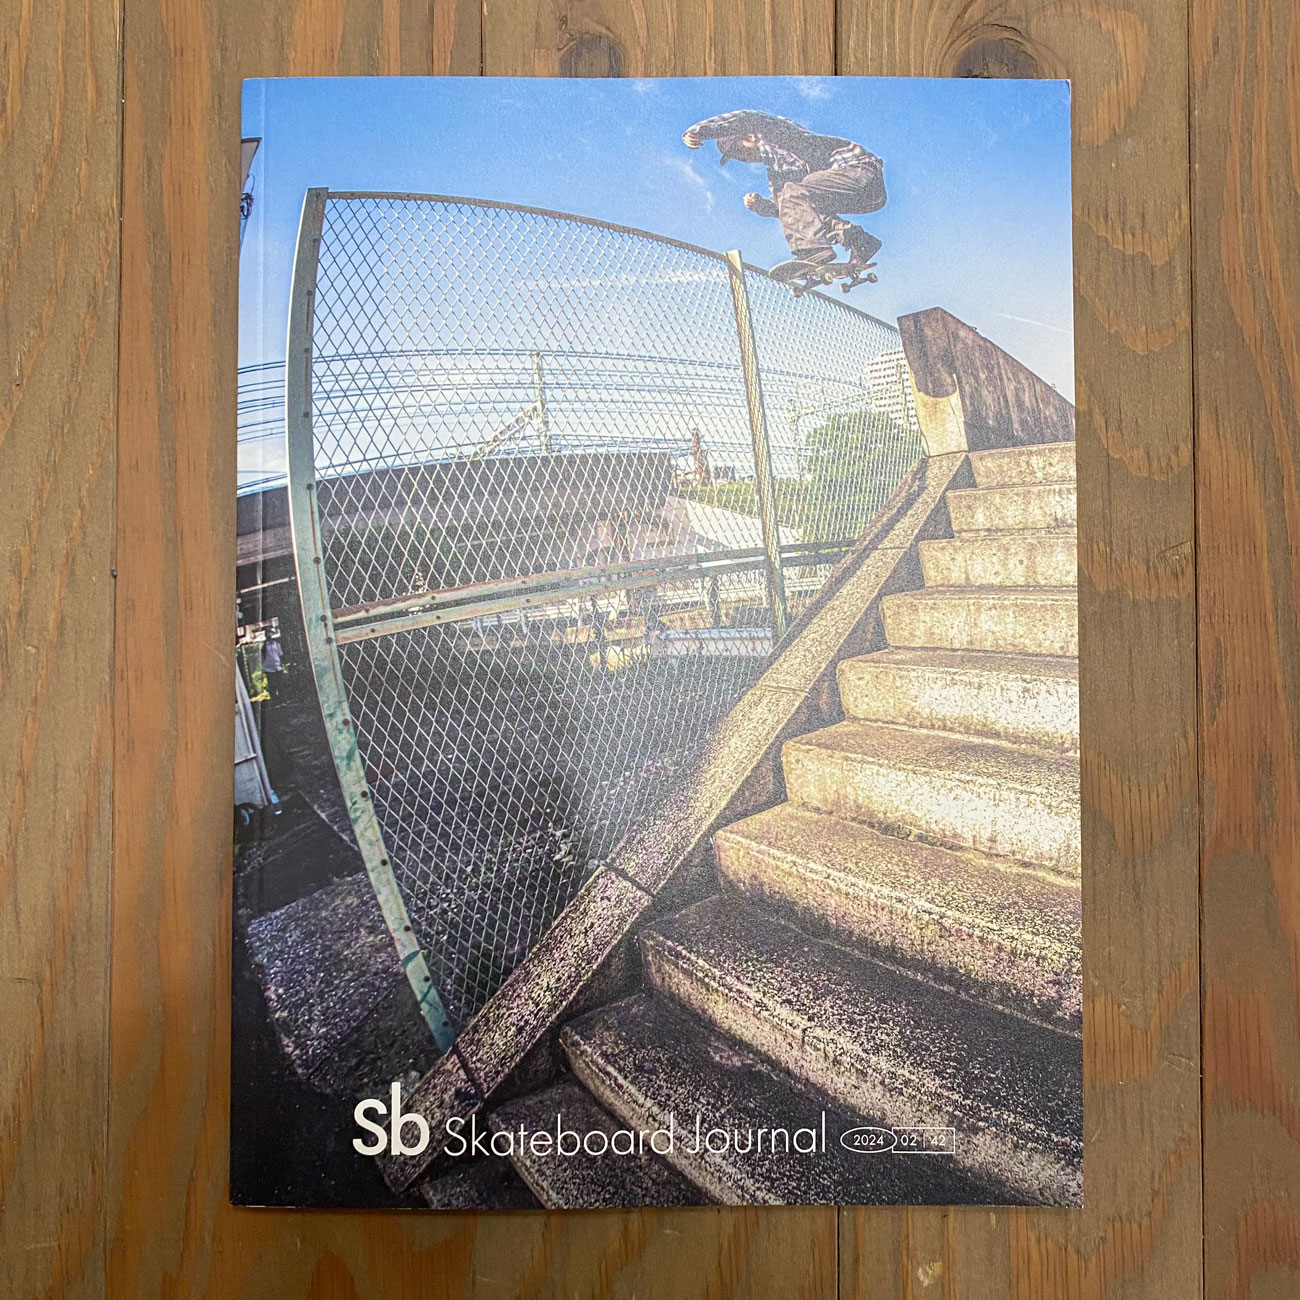 Sb Skateboard Journal Issue #42 本郷真太郎そしてスケートボード絶対領域